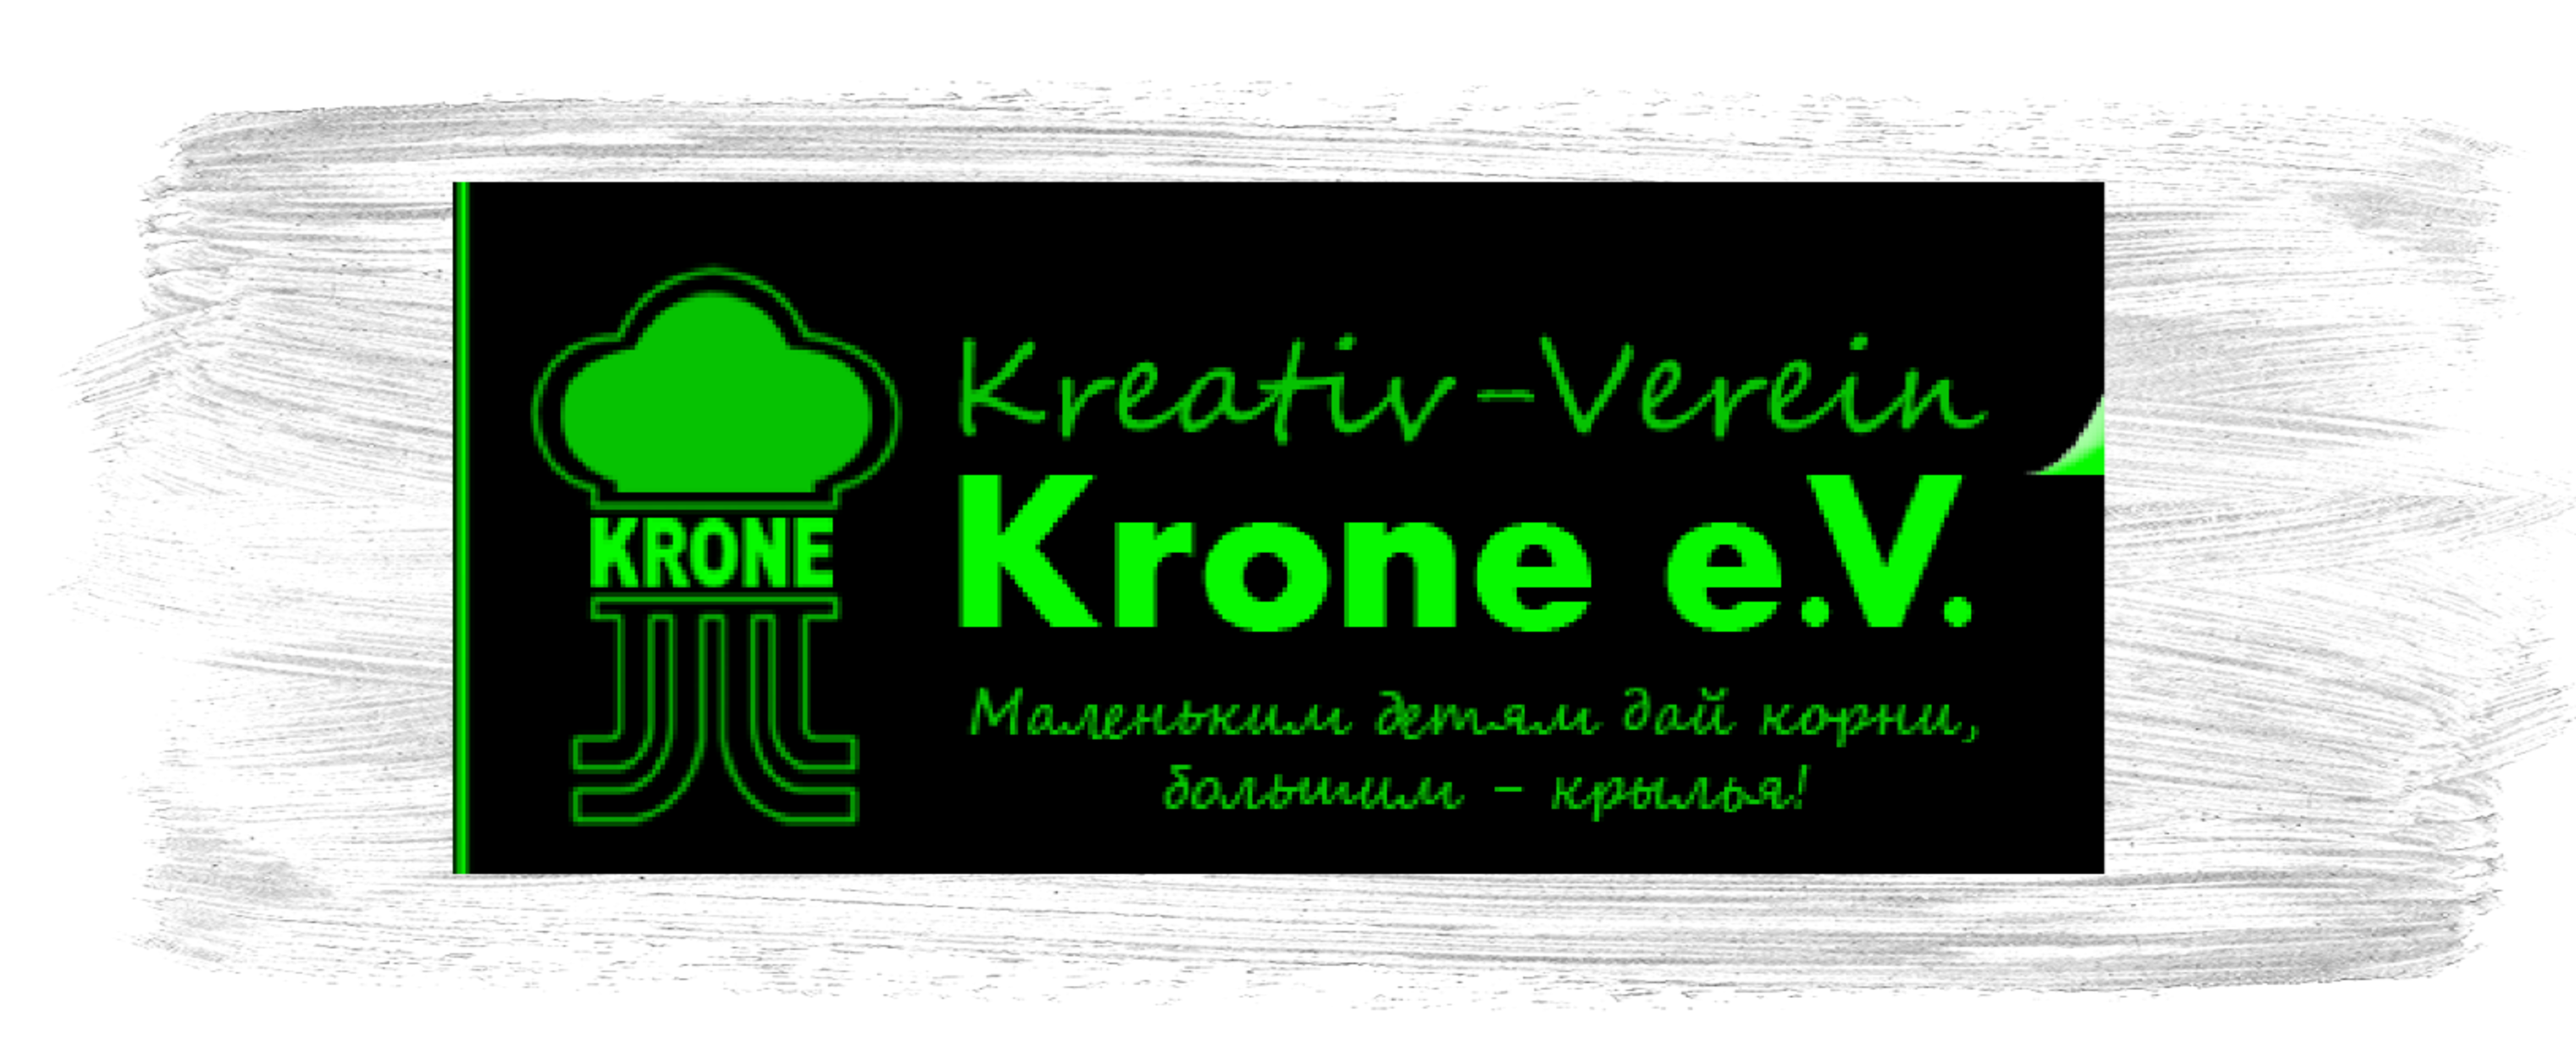 Krone e.V. Kreativ Verein